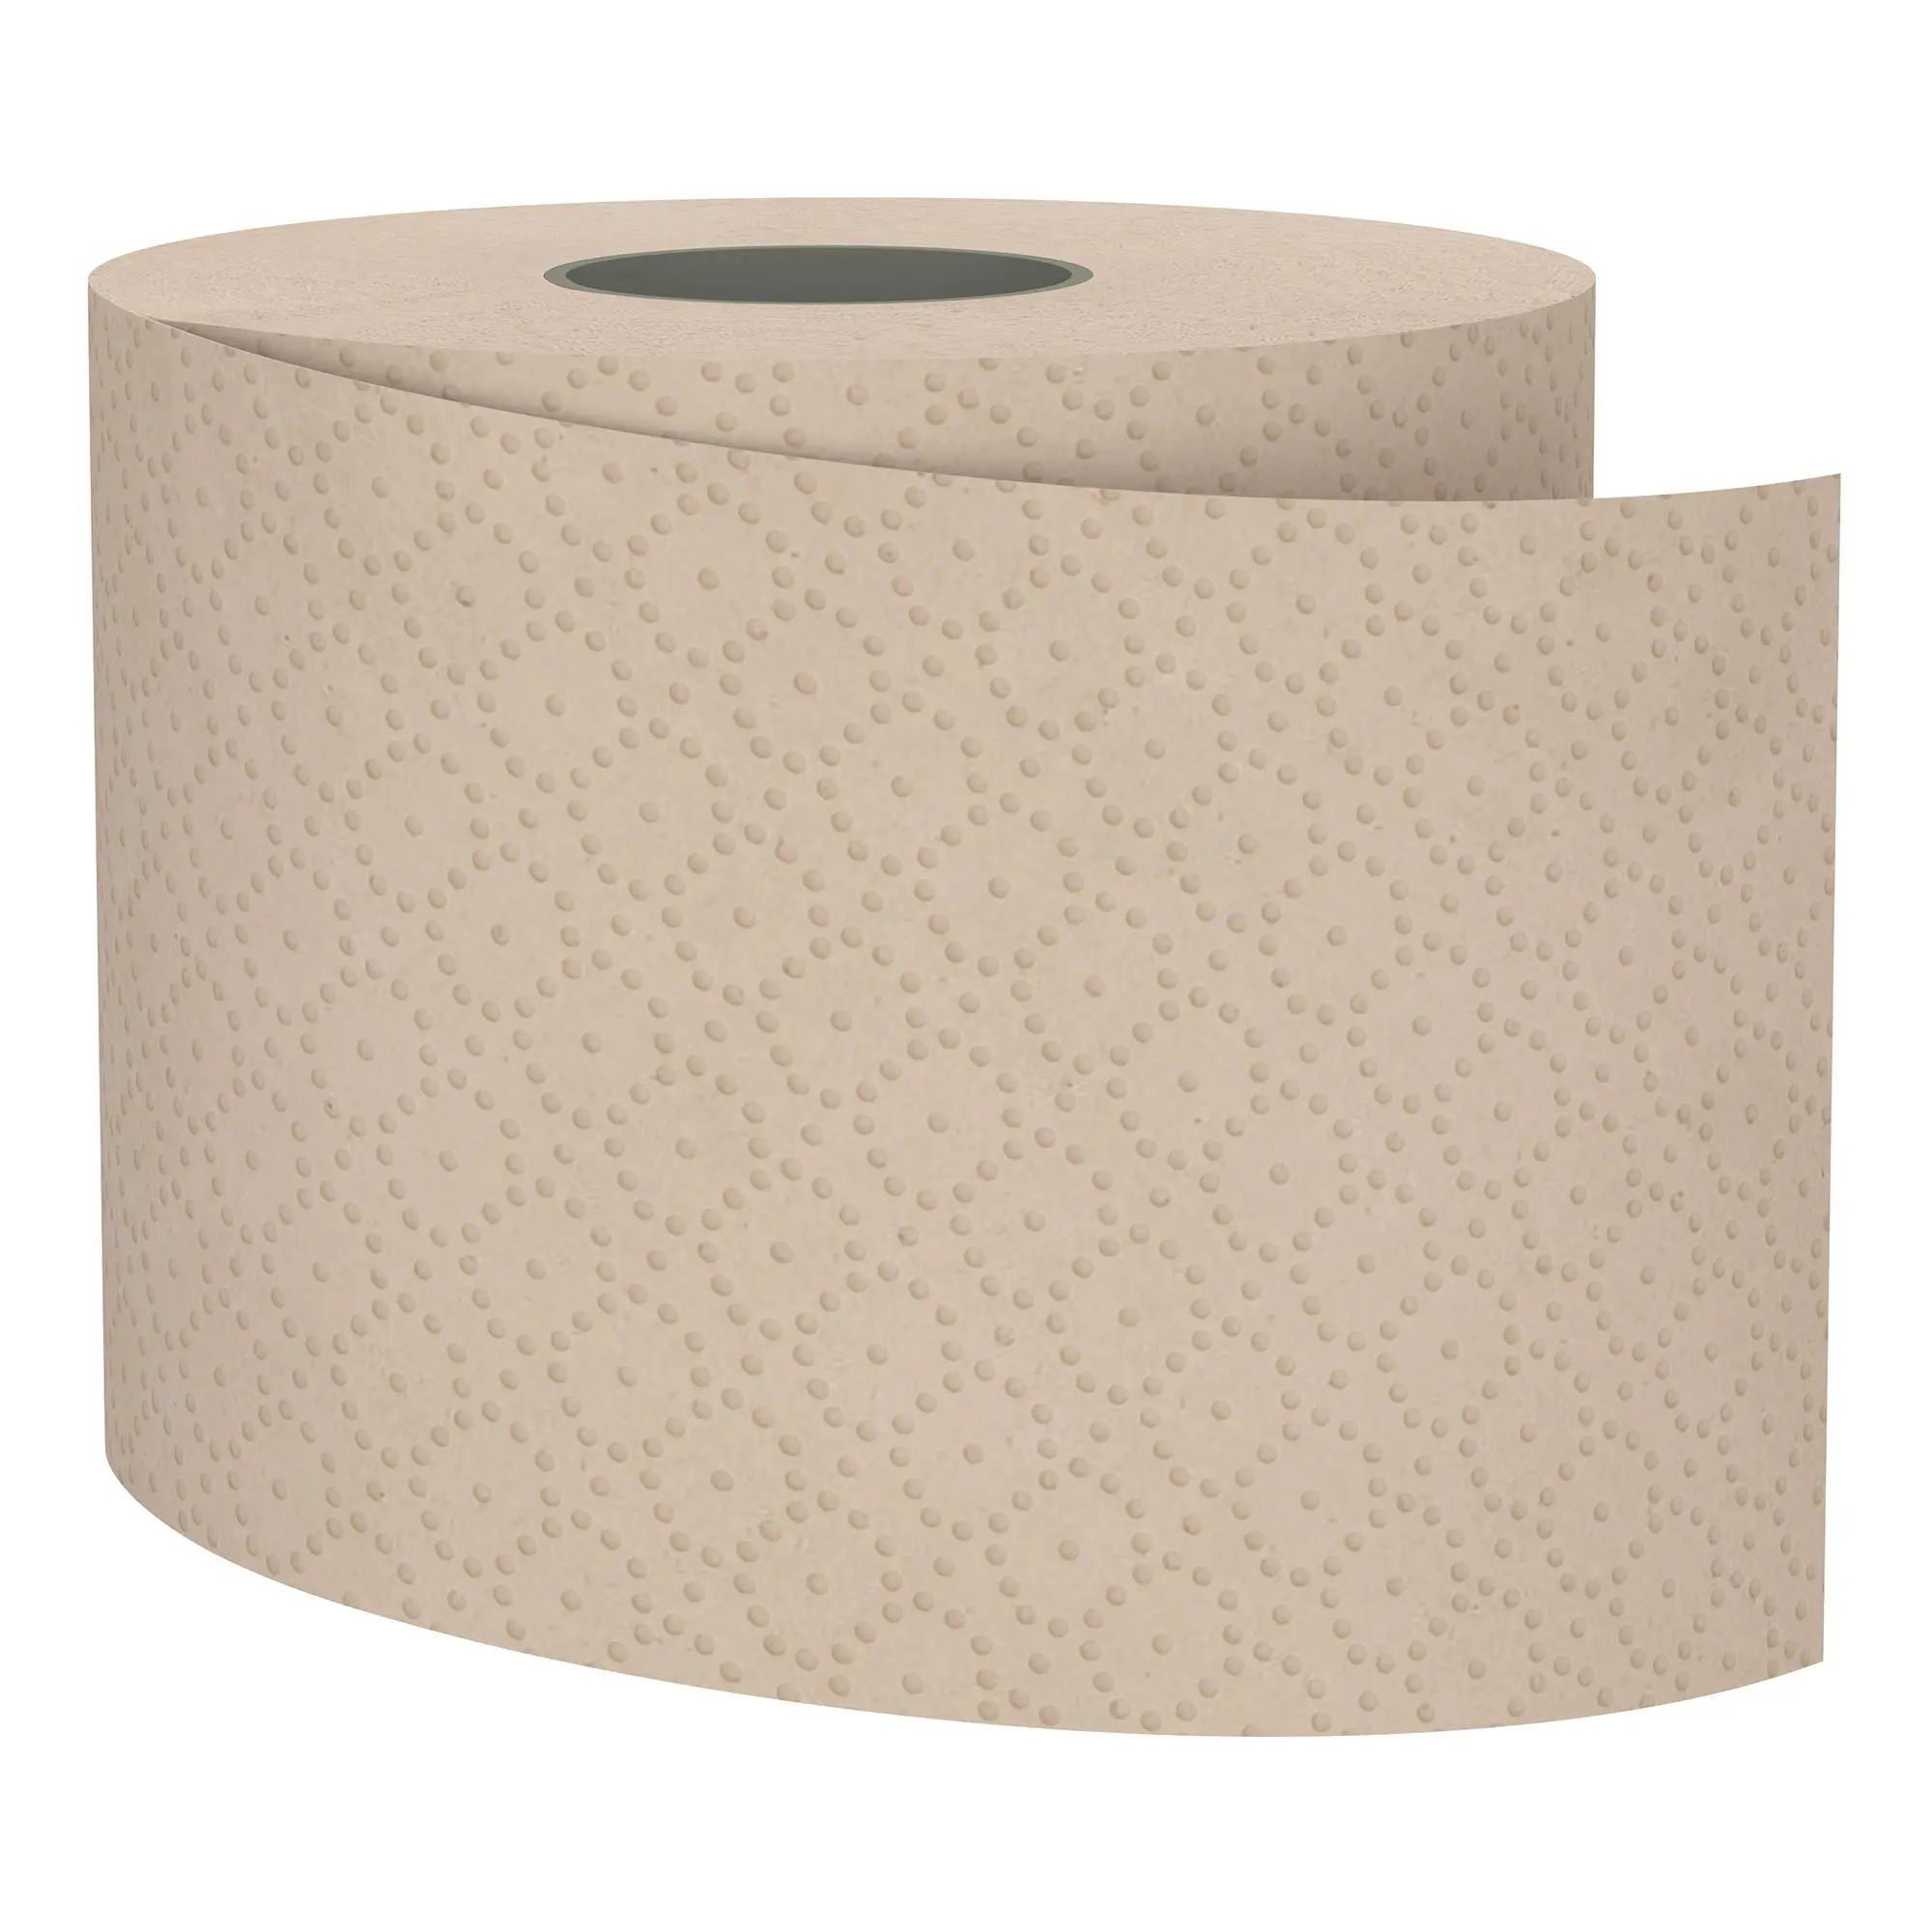 Satino by Wepa PureSoft Toilettenpapier MT1 Recycling, 2-lagig, 250 Blatt